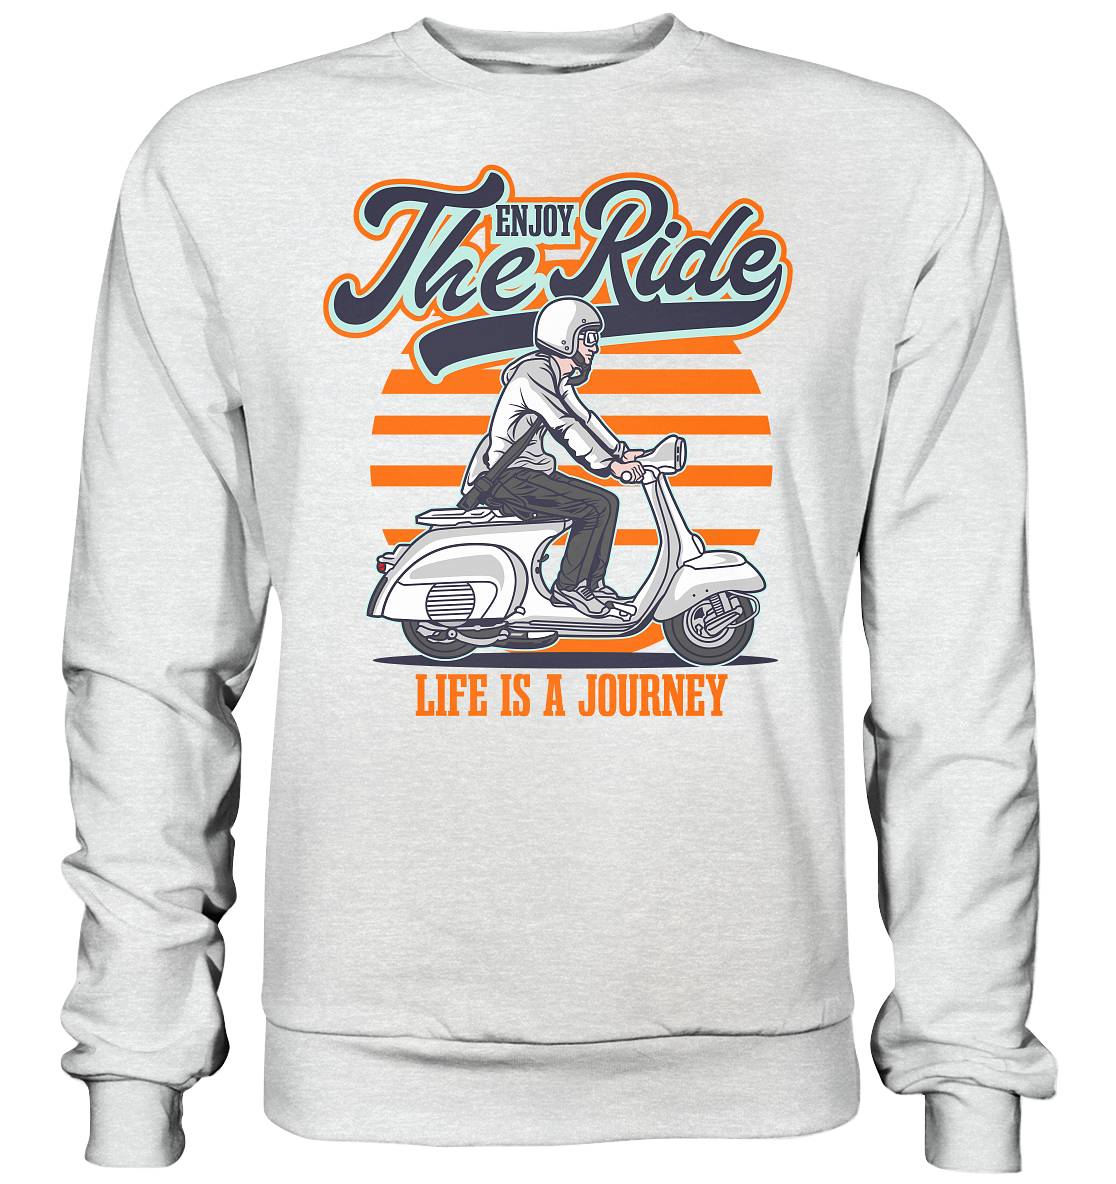 Enjoy the ride (Scooter) - Premium unisex Sweatshirt